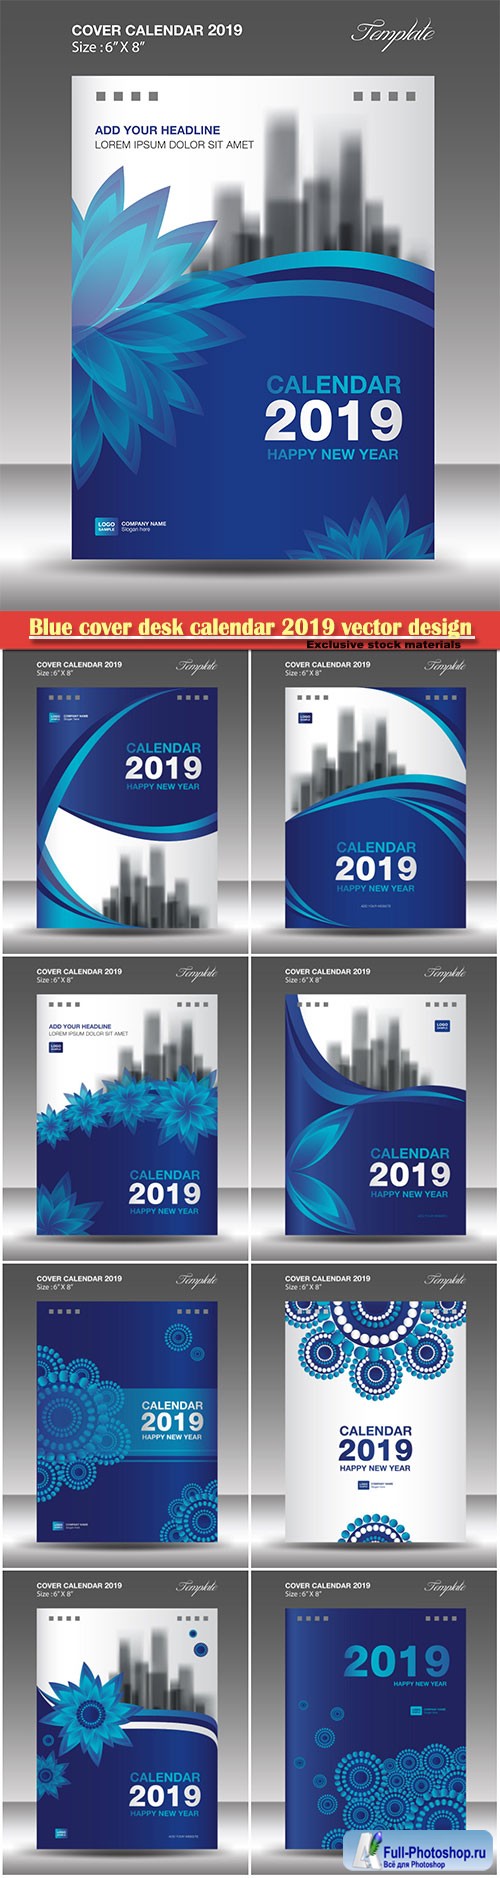 Blue cover desk calendar 2019 vector design template